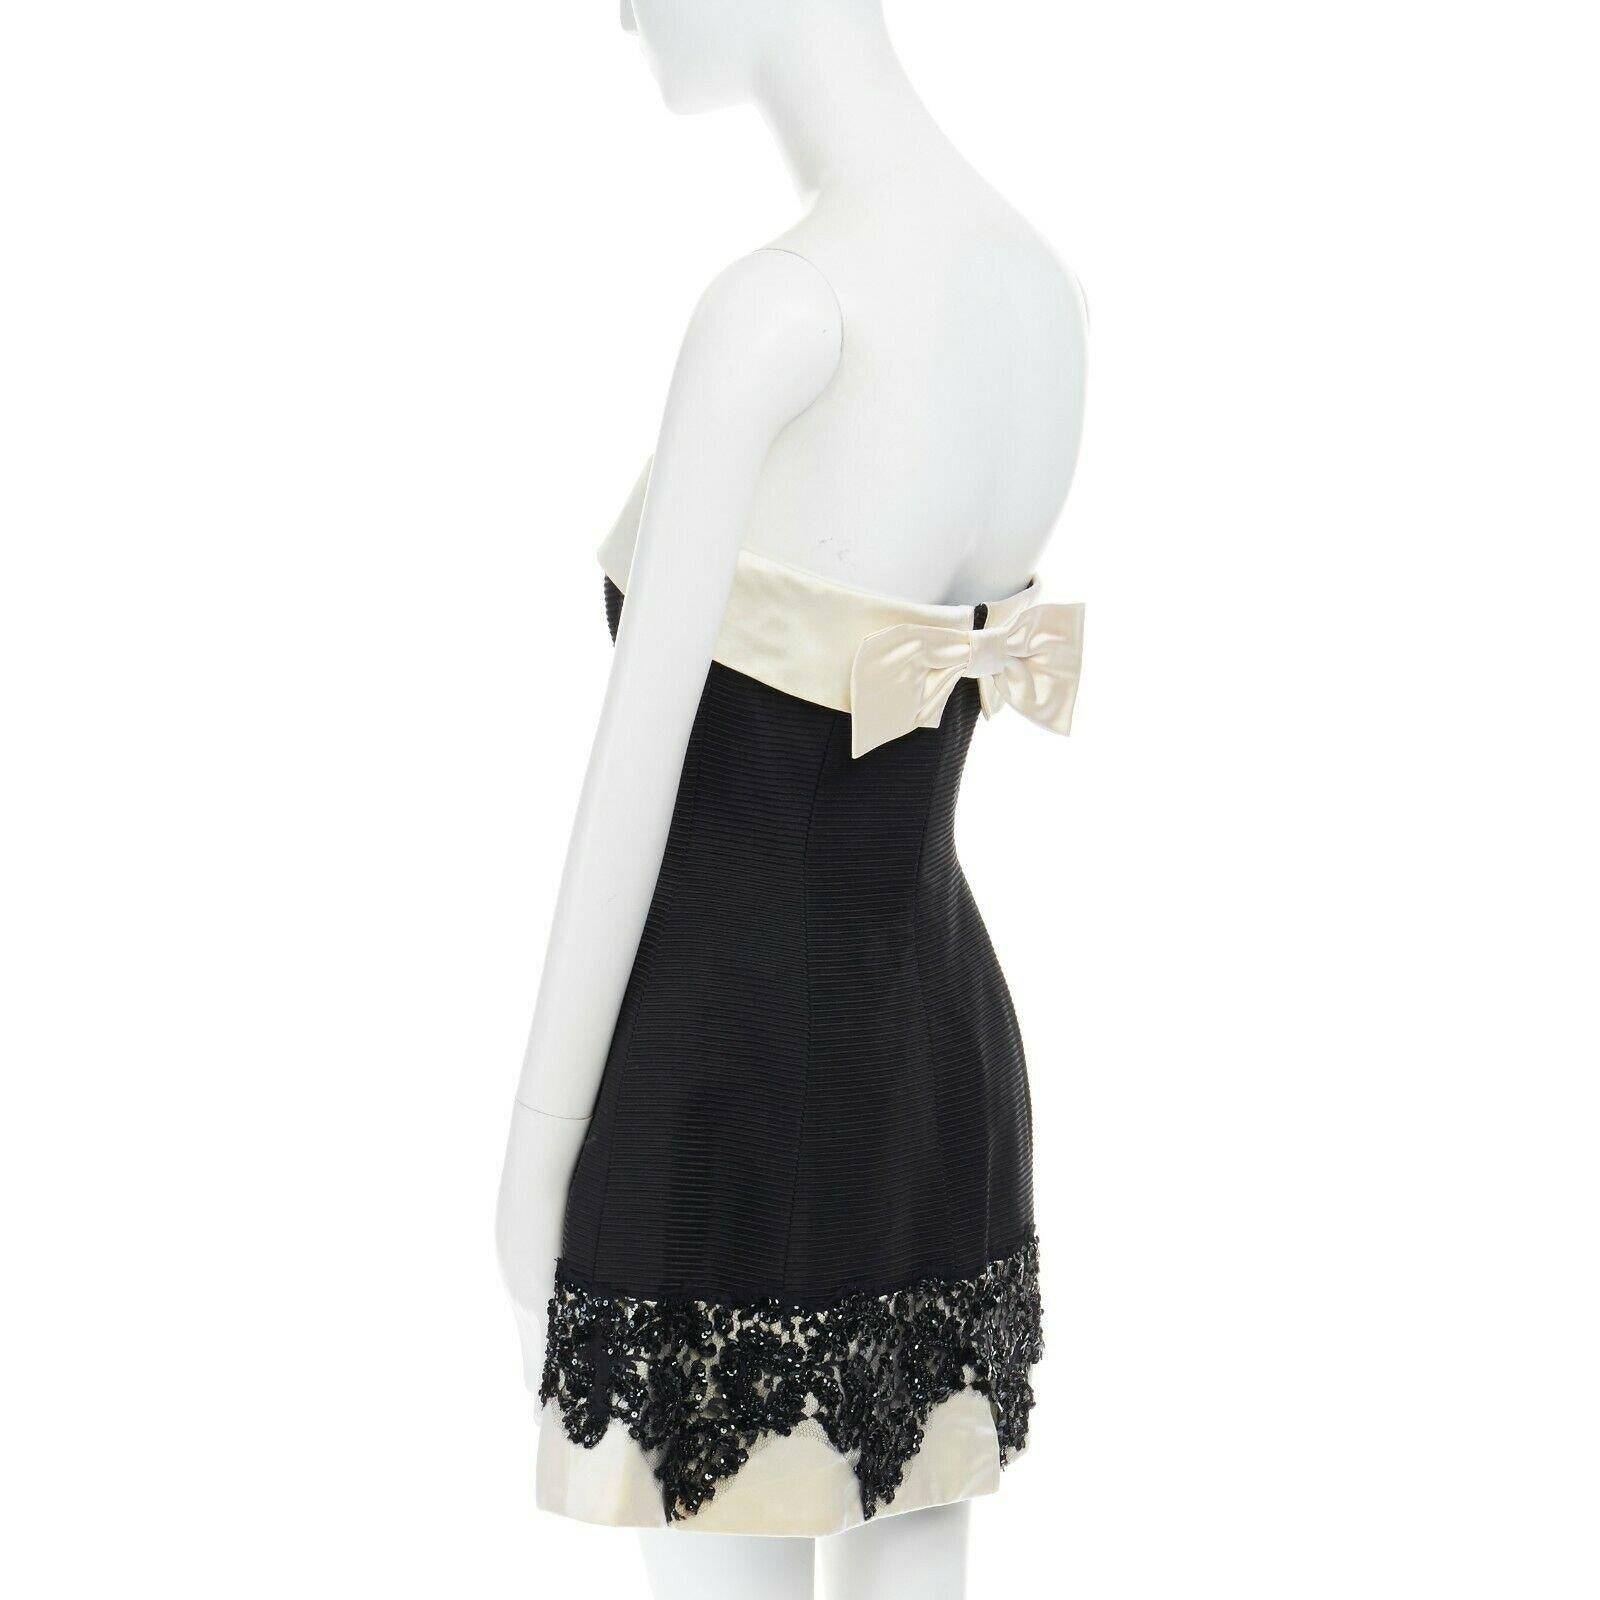 JENNY PACKHAM black sequins embroidered lace hem strapless cocktail dress UK6 XS 1